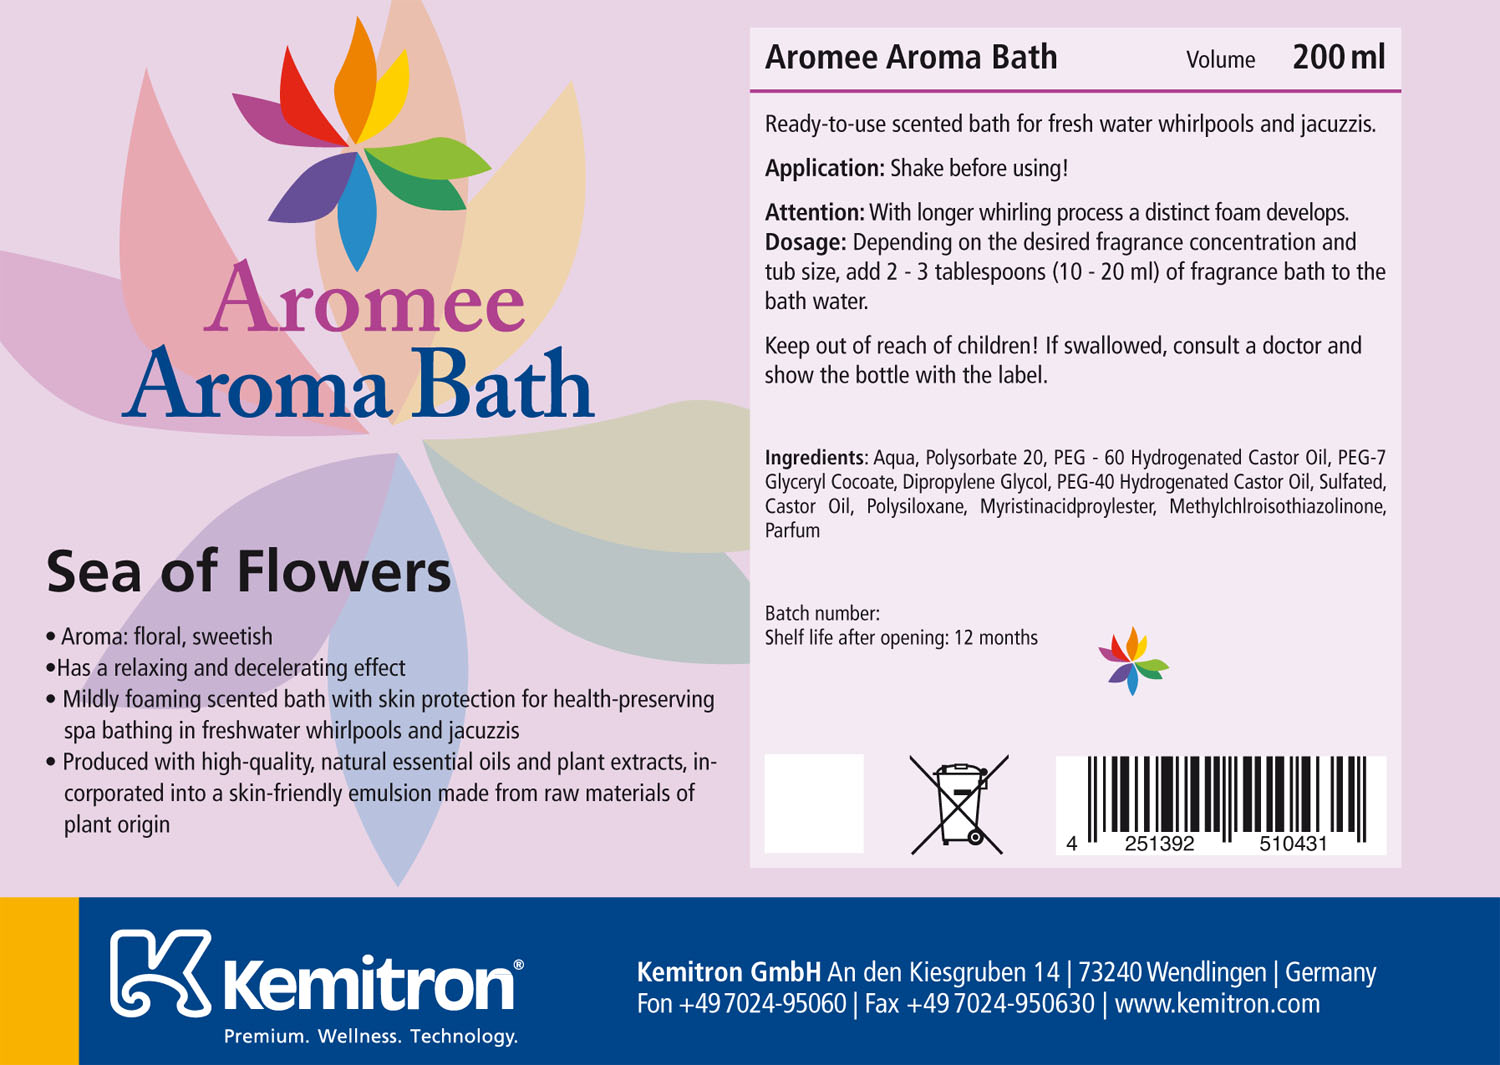 Aromee Aromabath "Sea of Flowers"